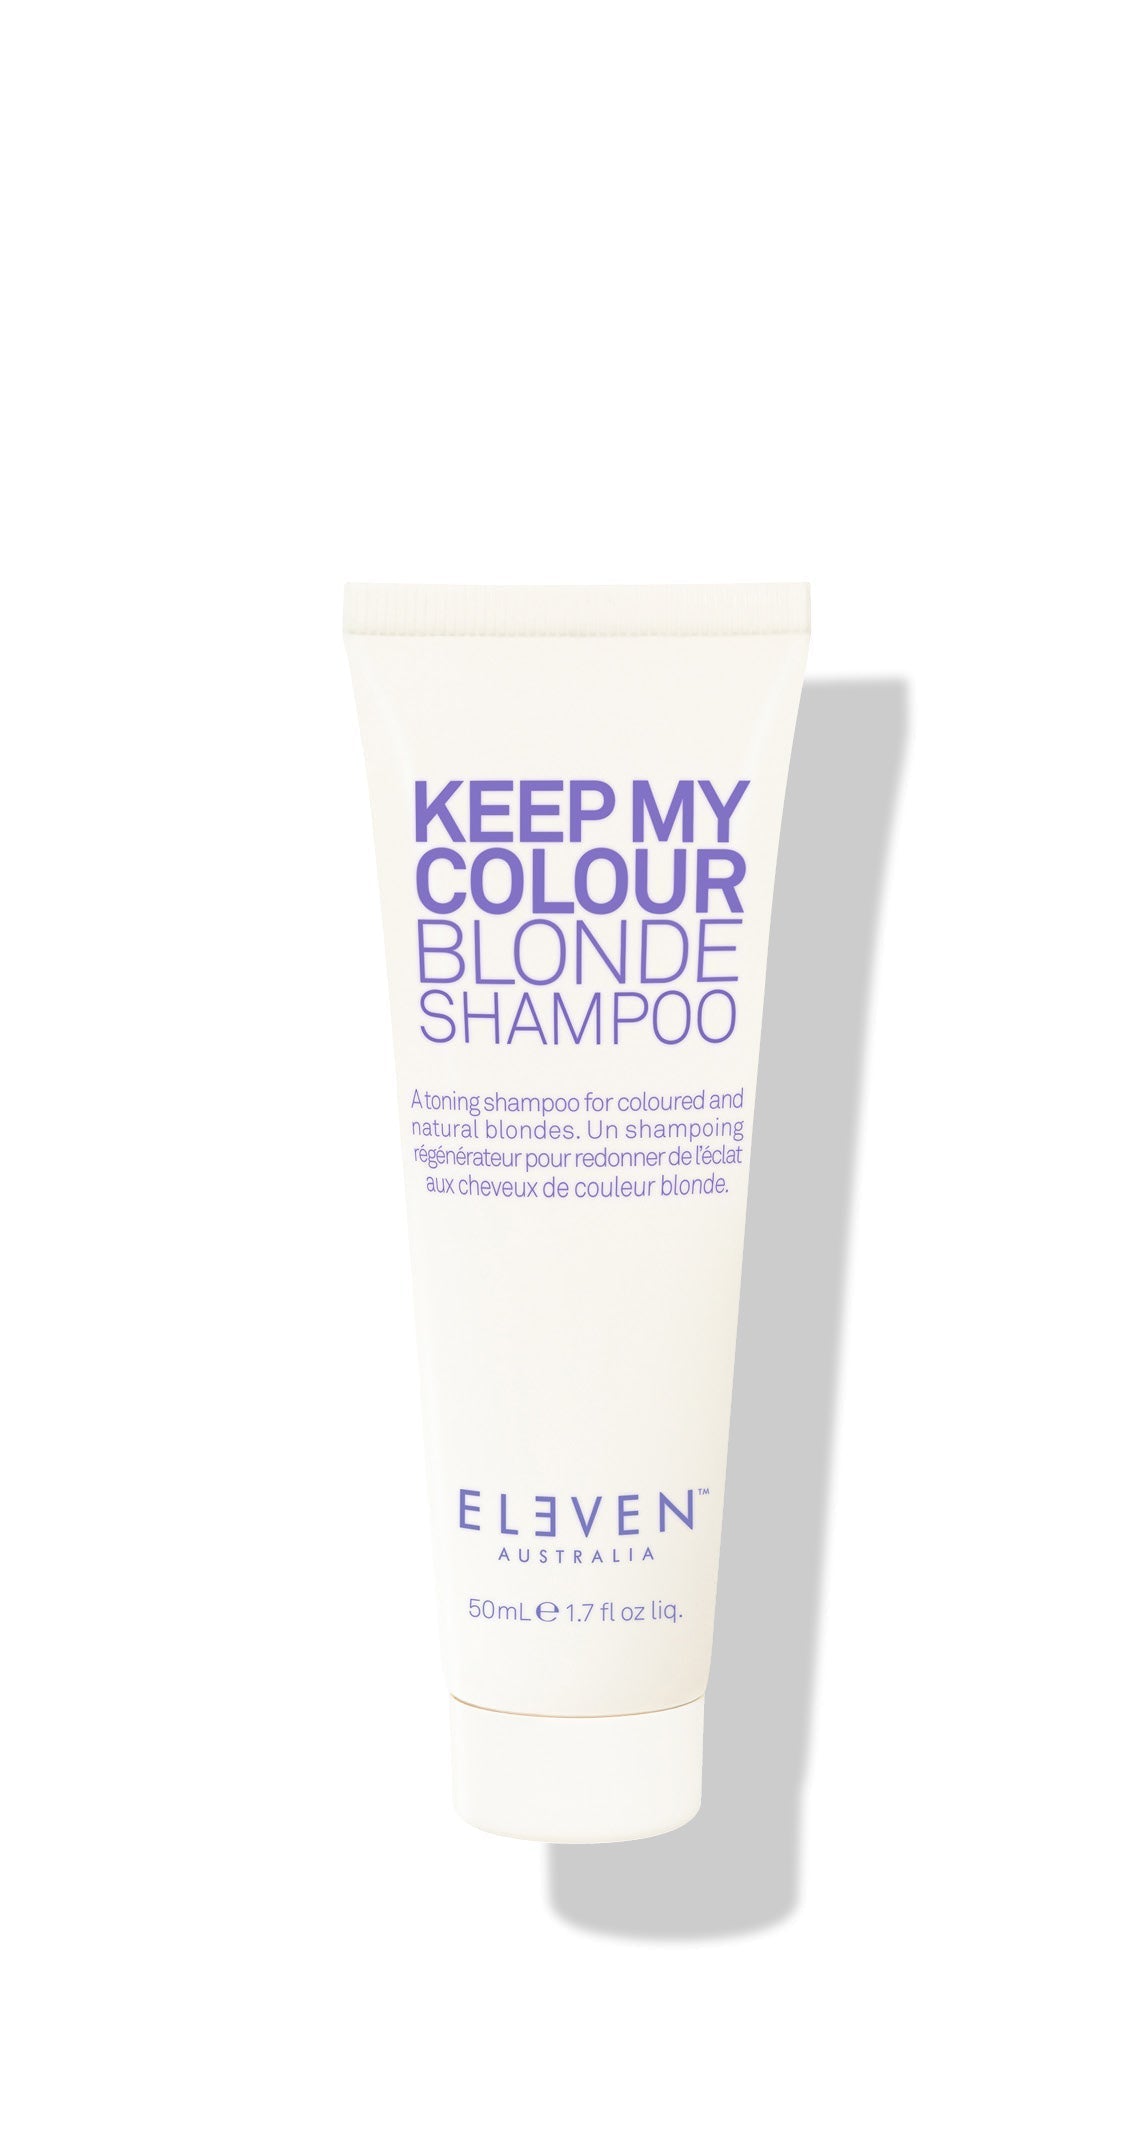 Keep My Colour Blonde Shampoo - 50ml - ELEVEN Australia